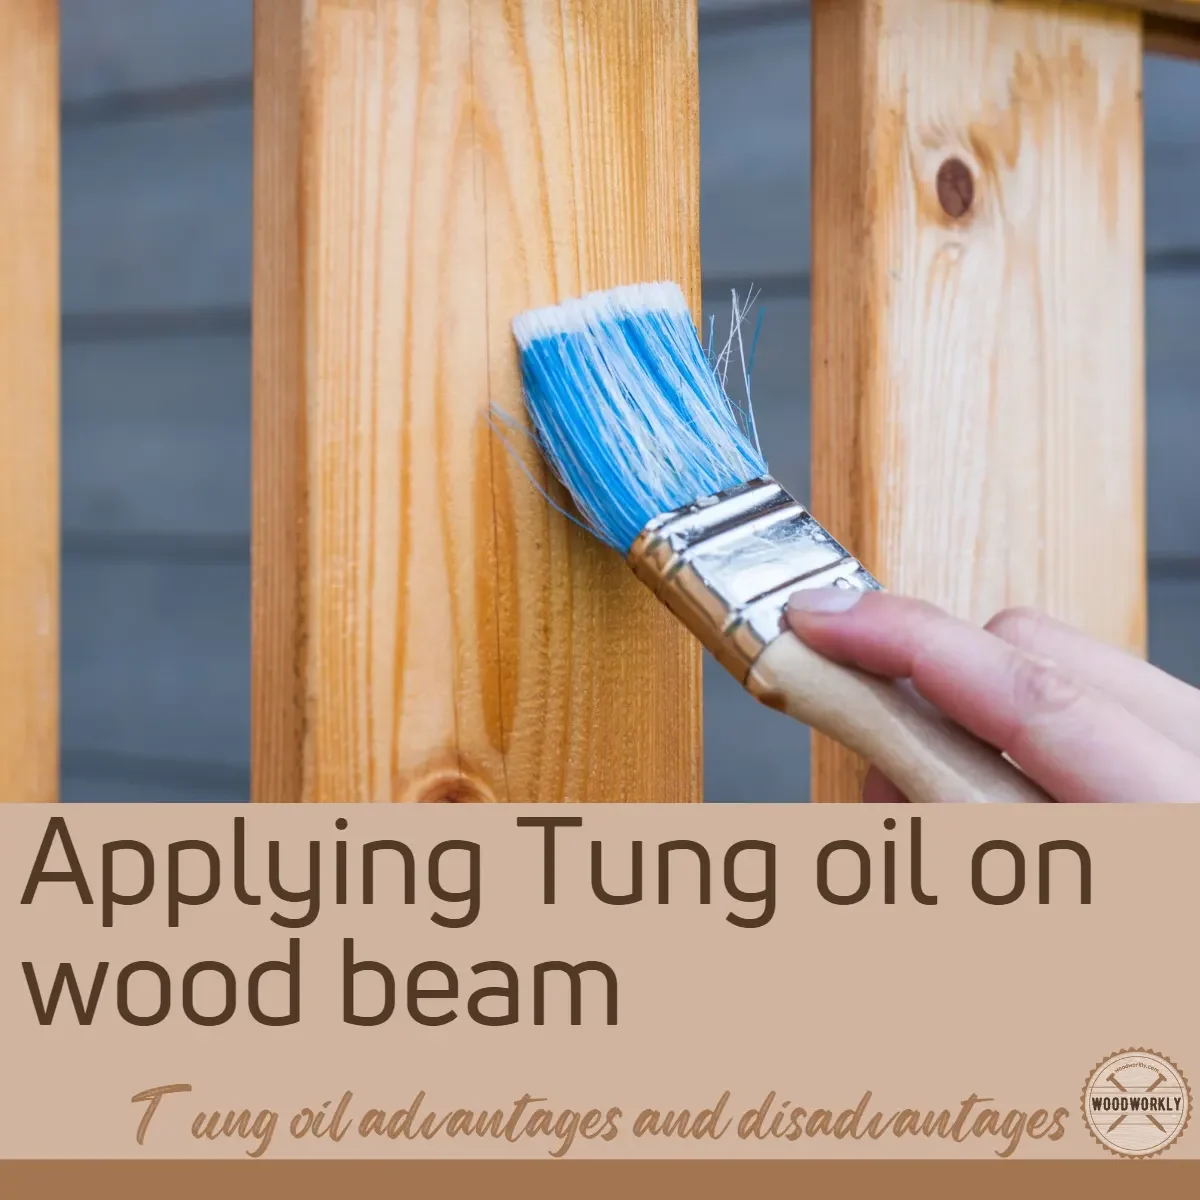 Applying Tung oil on wood beam